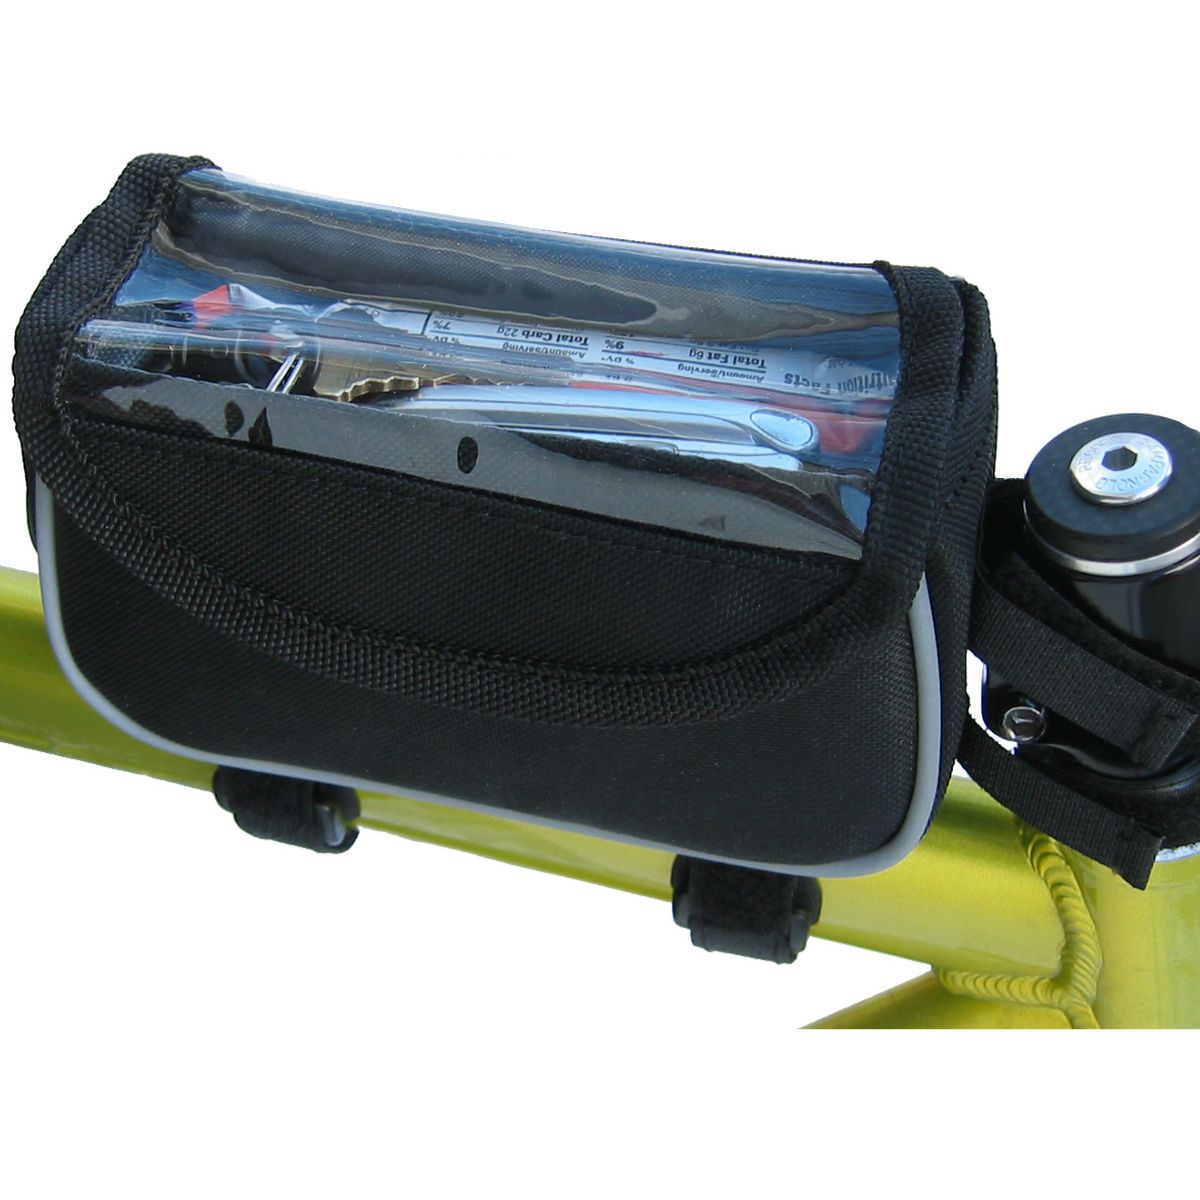 BAG SUNLT TOP TUBE BENTO BOX LG w/PHONE WINDOW BK (G) - The Bike Shop